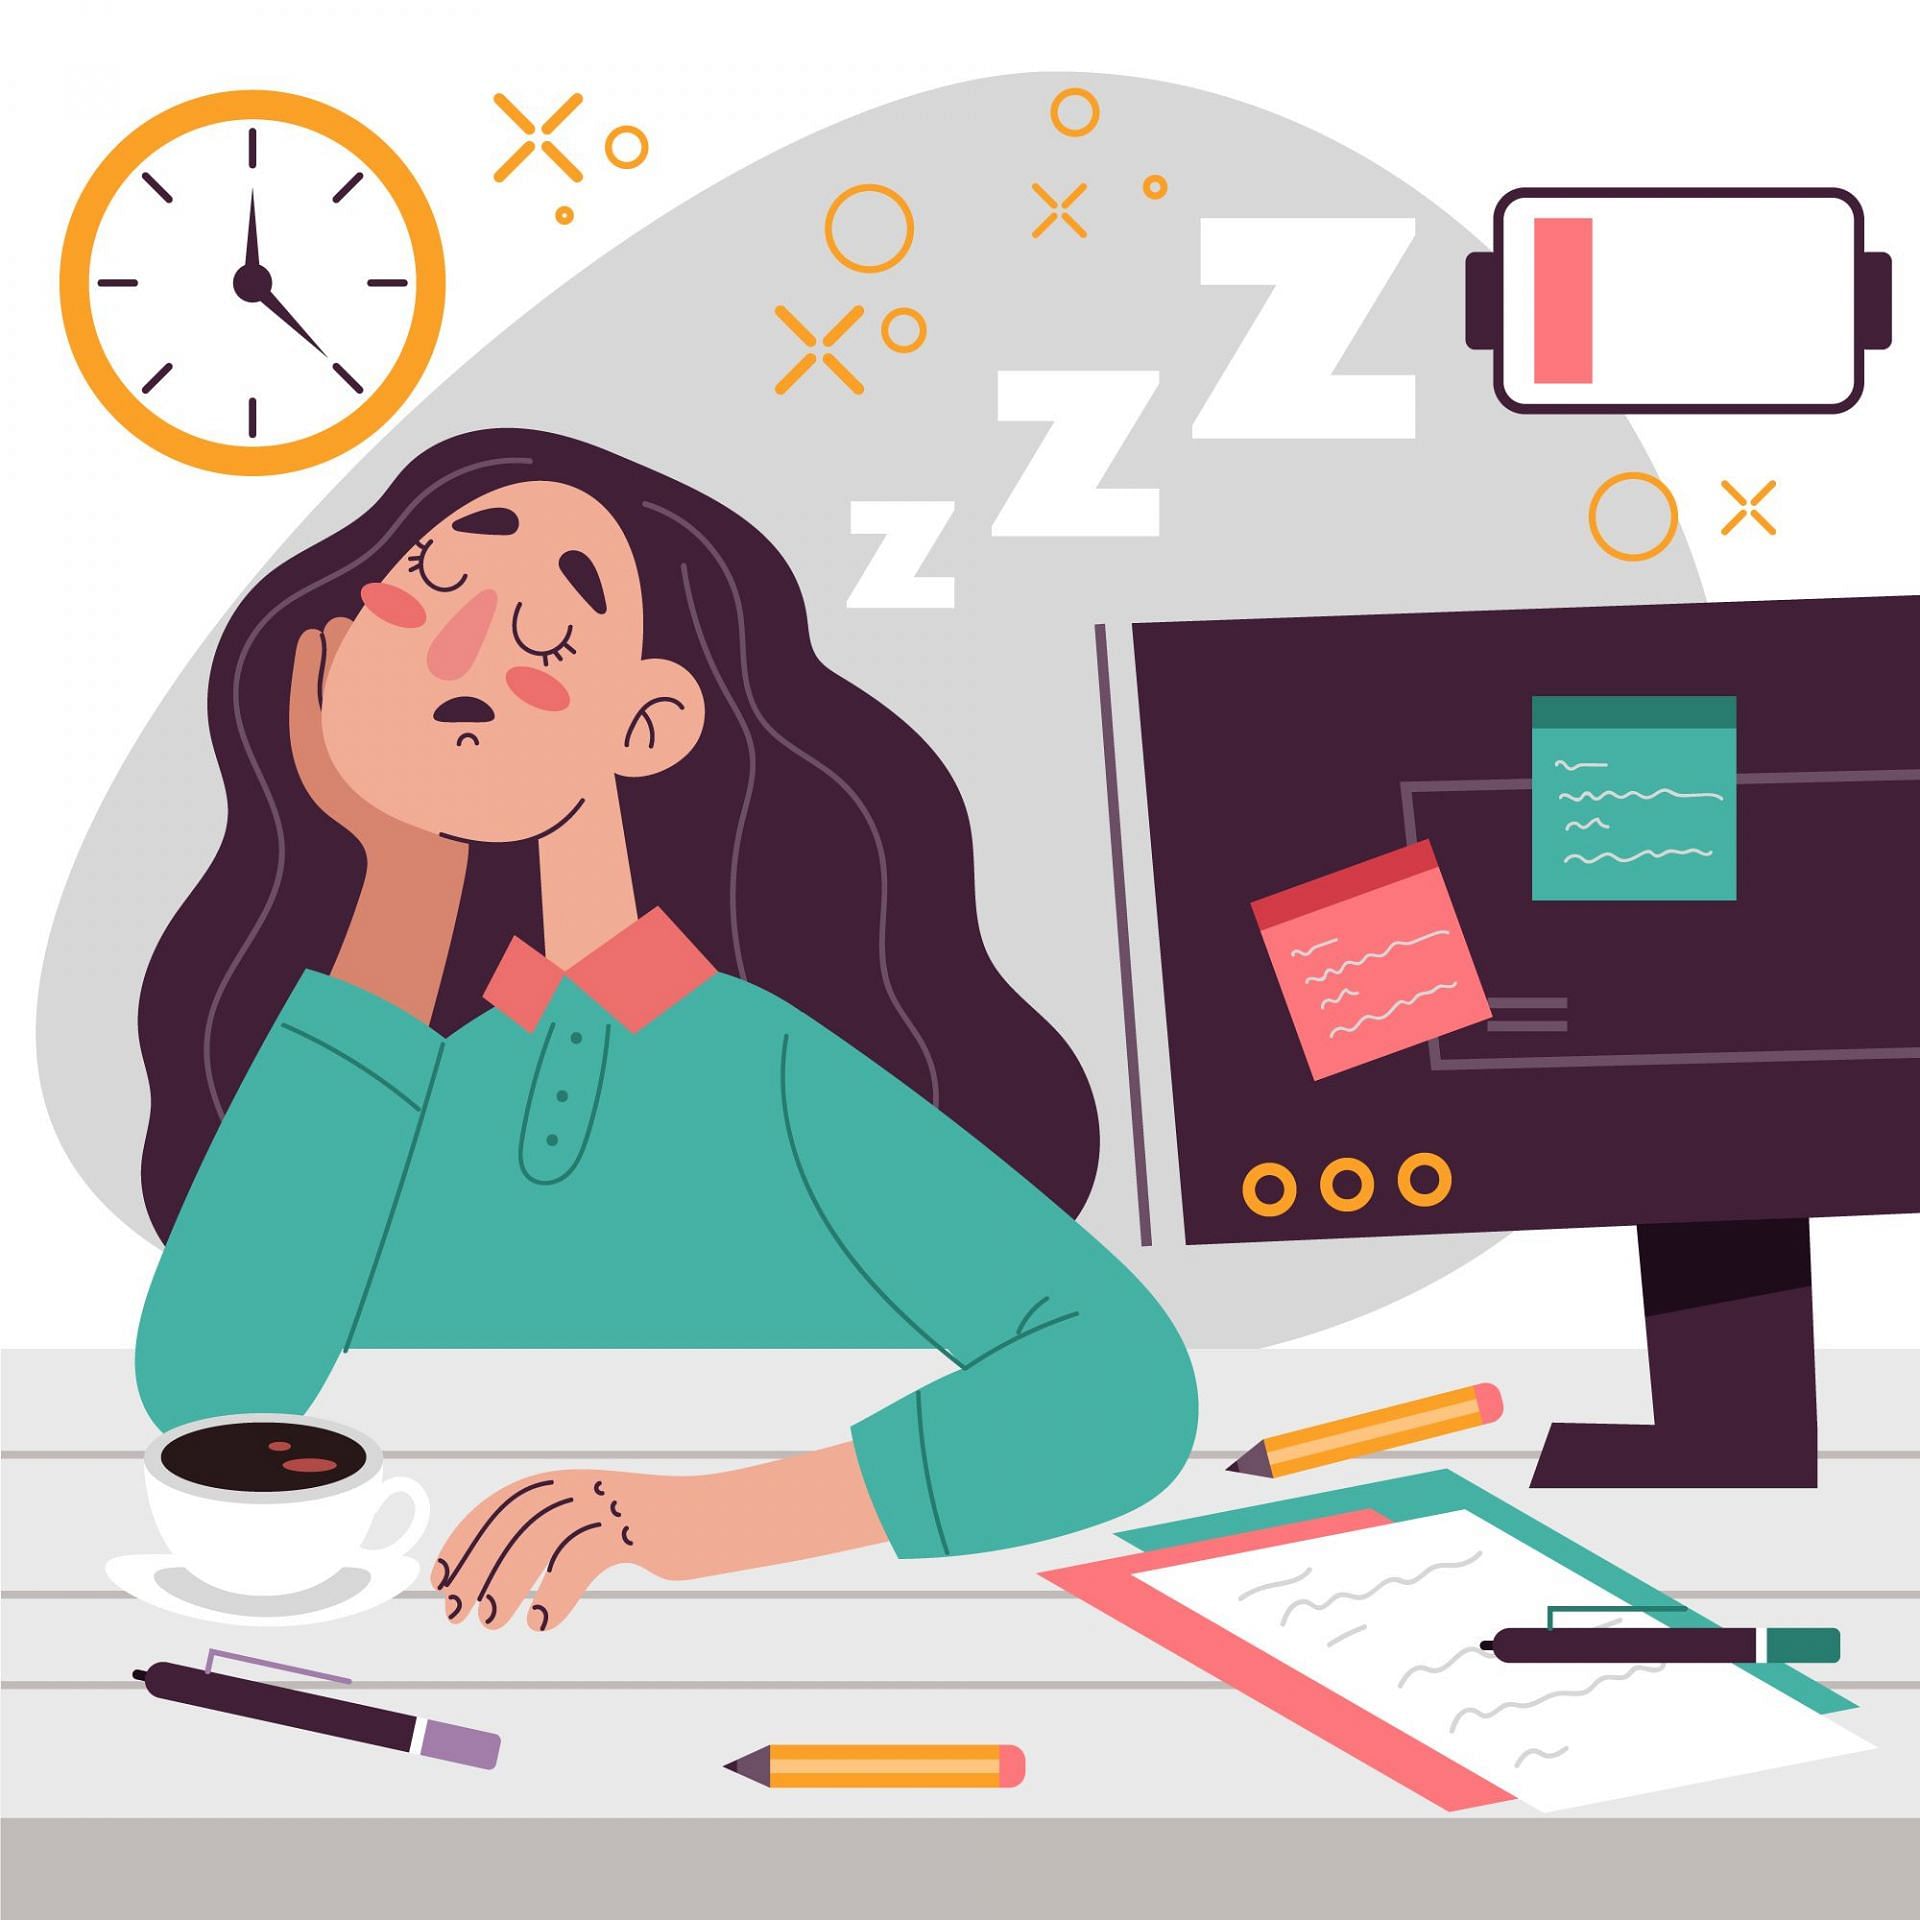 Shift work sleep disorder can influence day-to-day life. (Image via Freepik/Freepik)